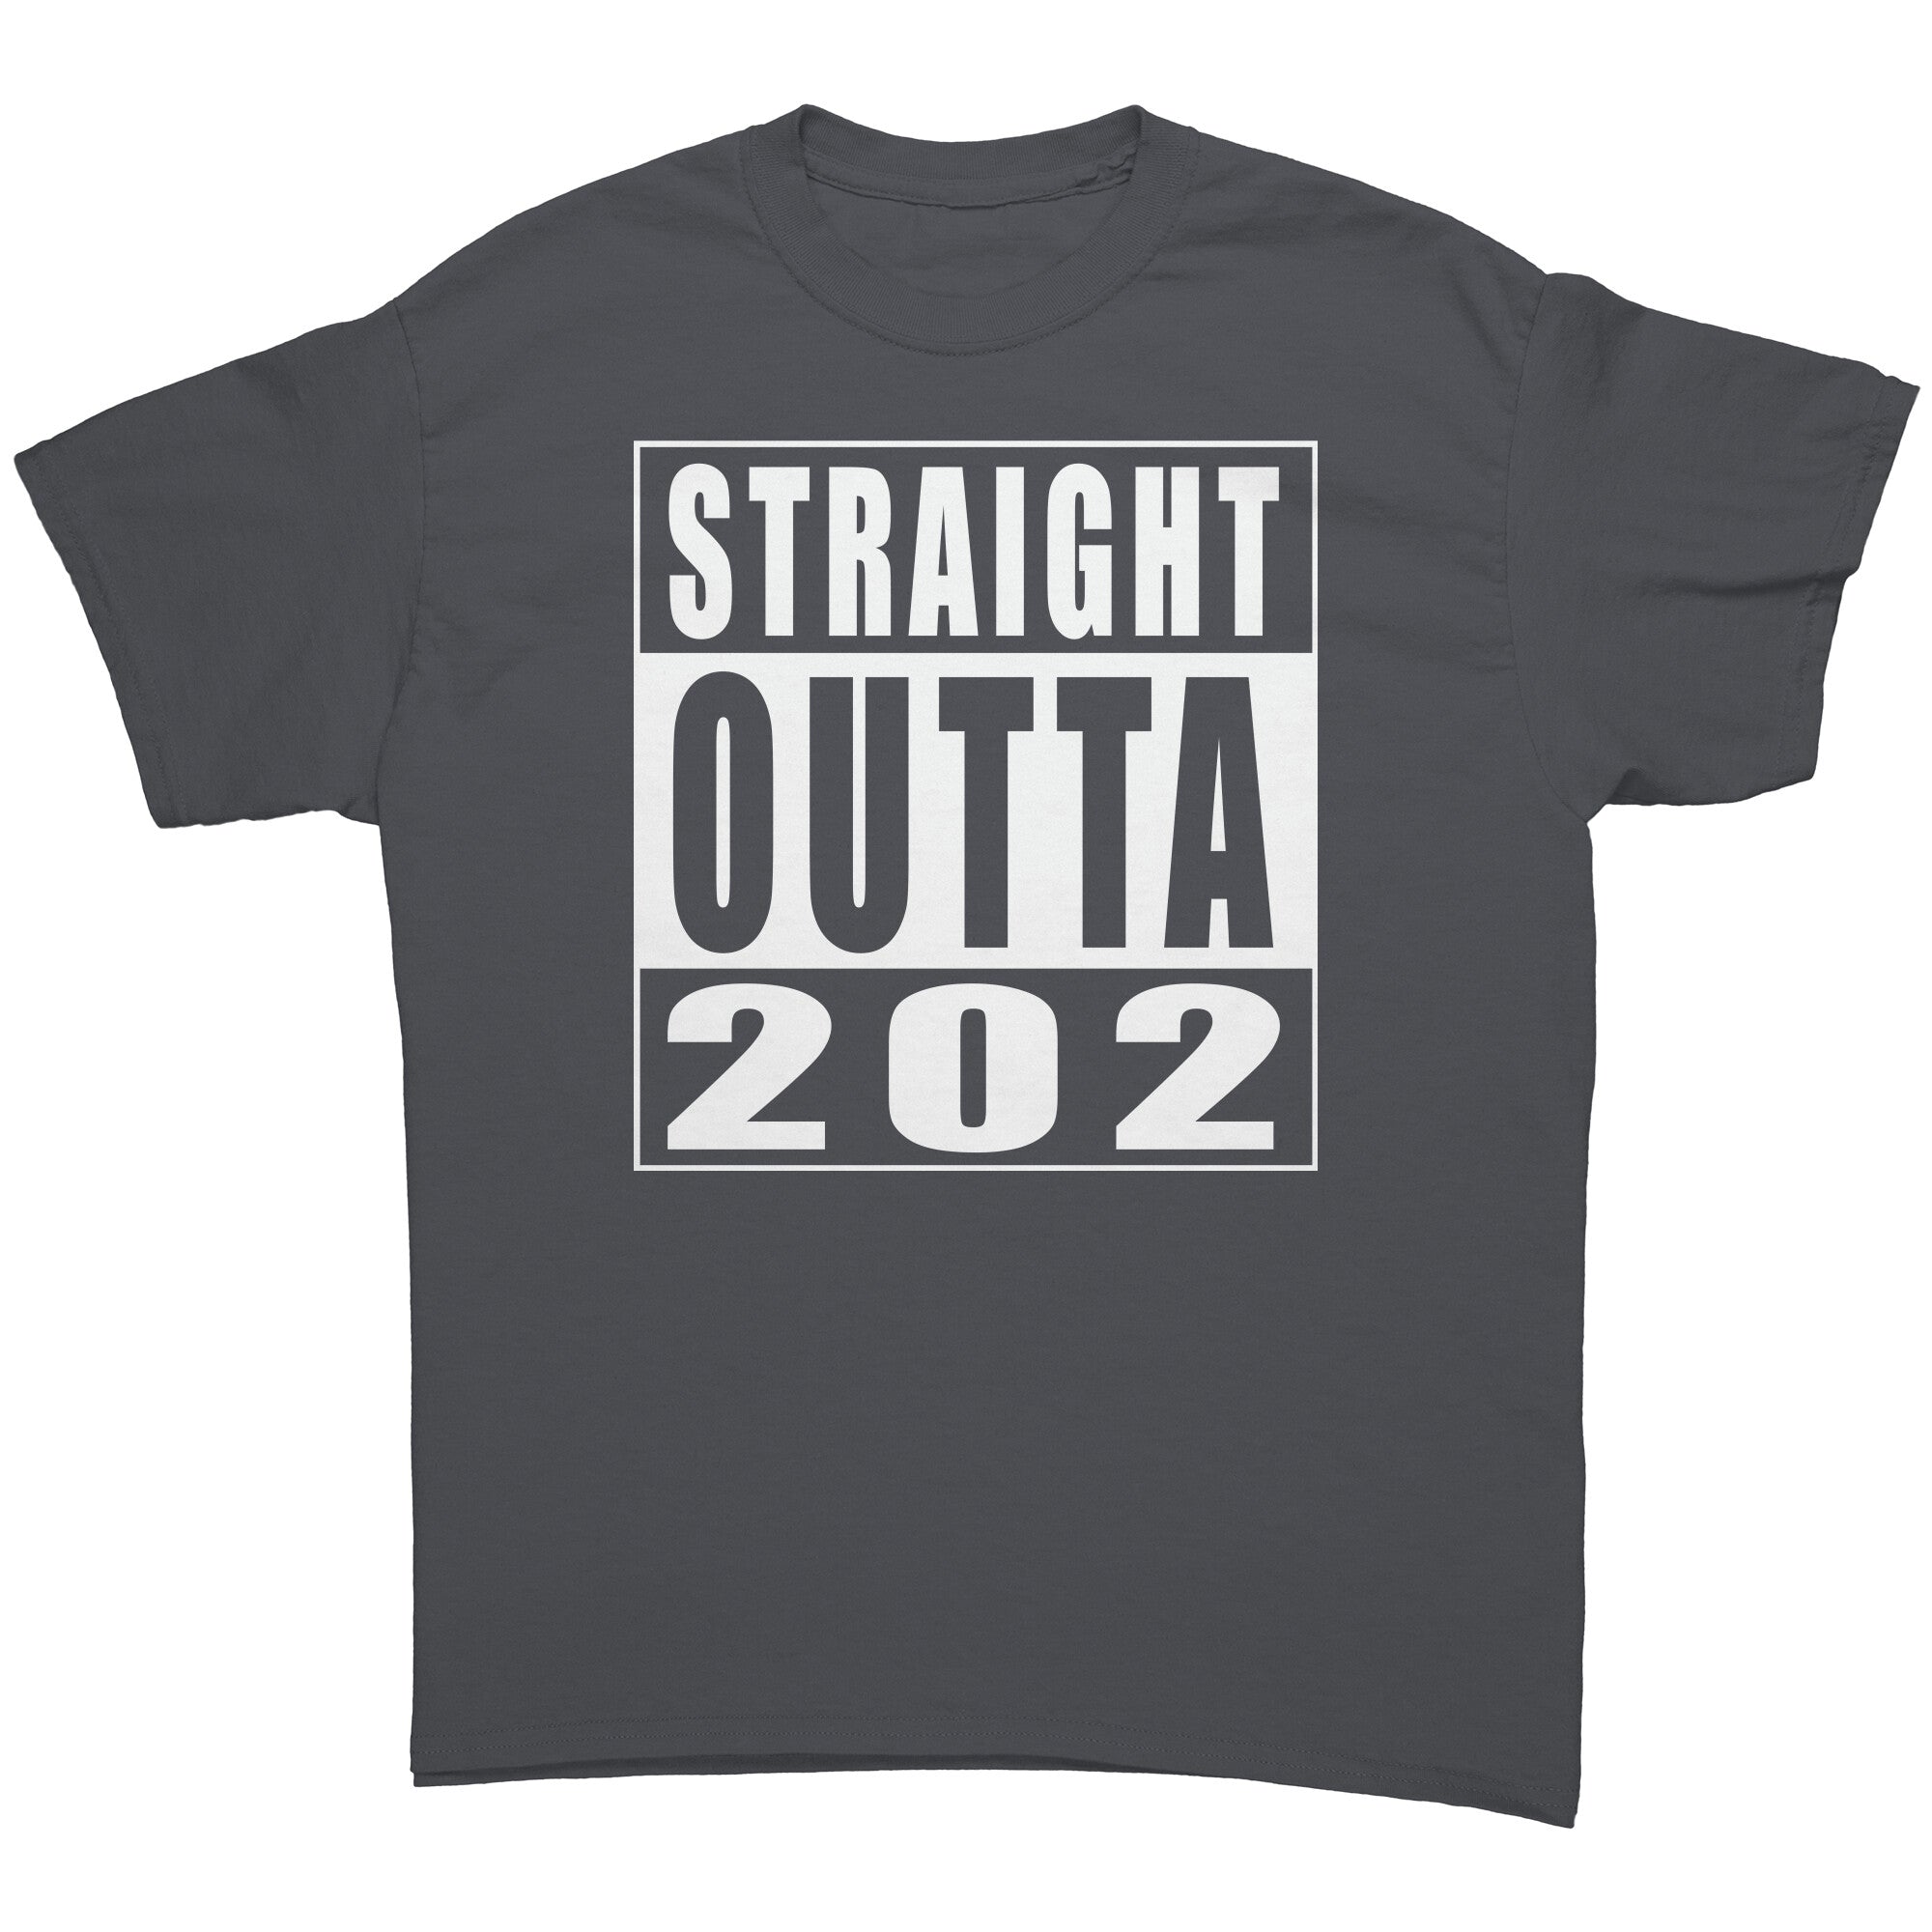 Straight Outta 202